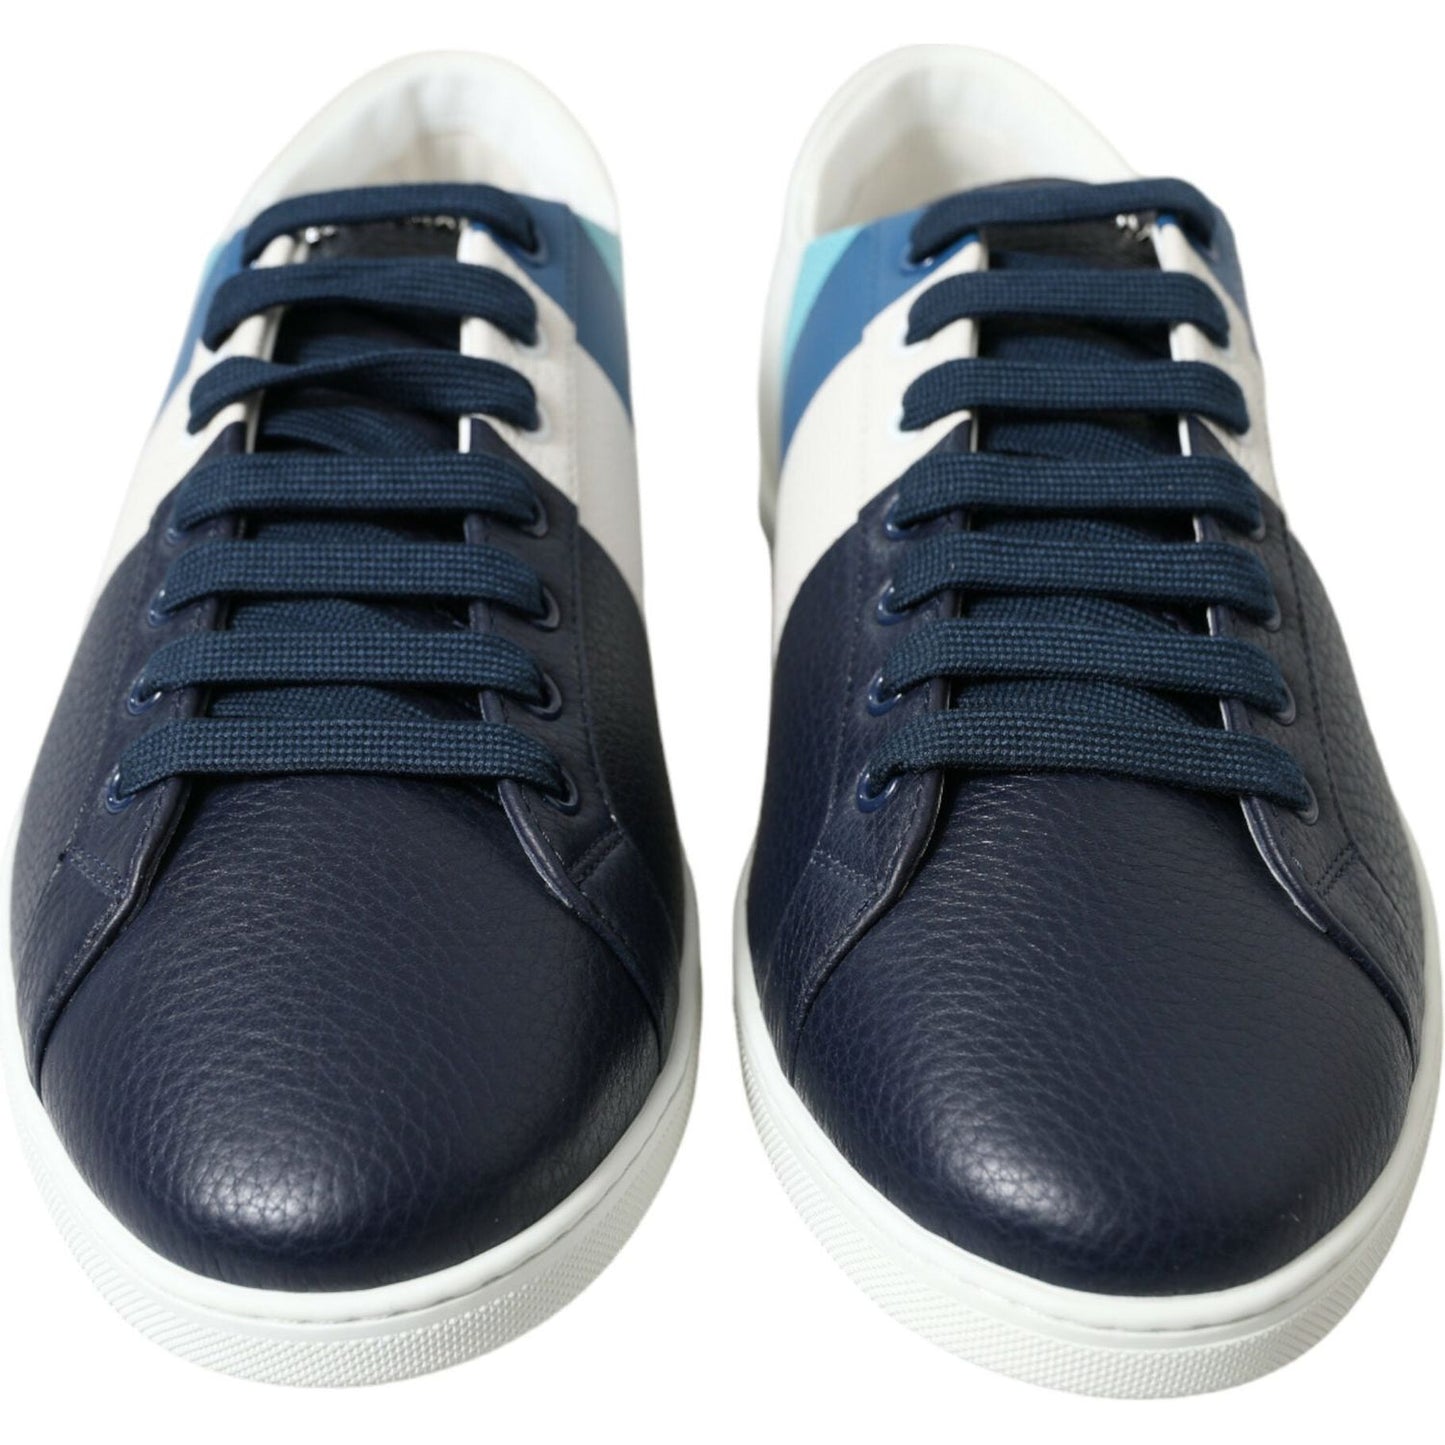 Dolce & Gabbana Elegant White and Blue Leather Sneakers white-blue-leather-low-top-sneakers-shoes-3